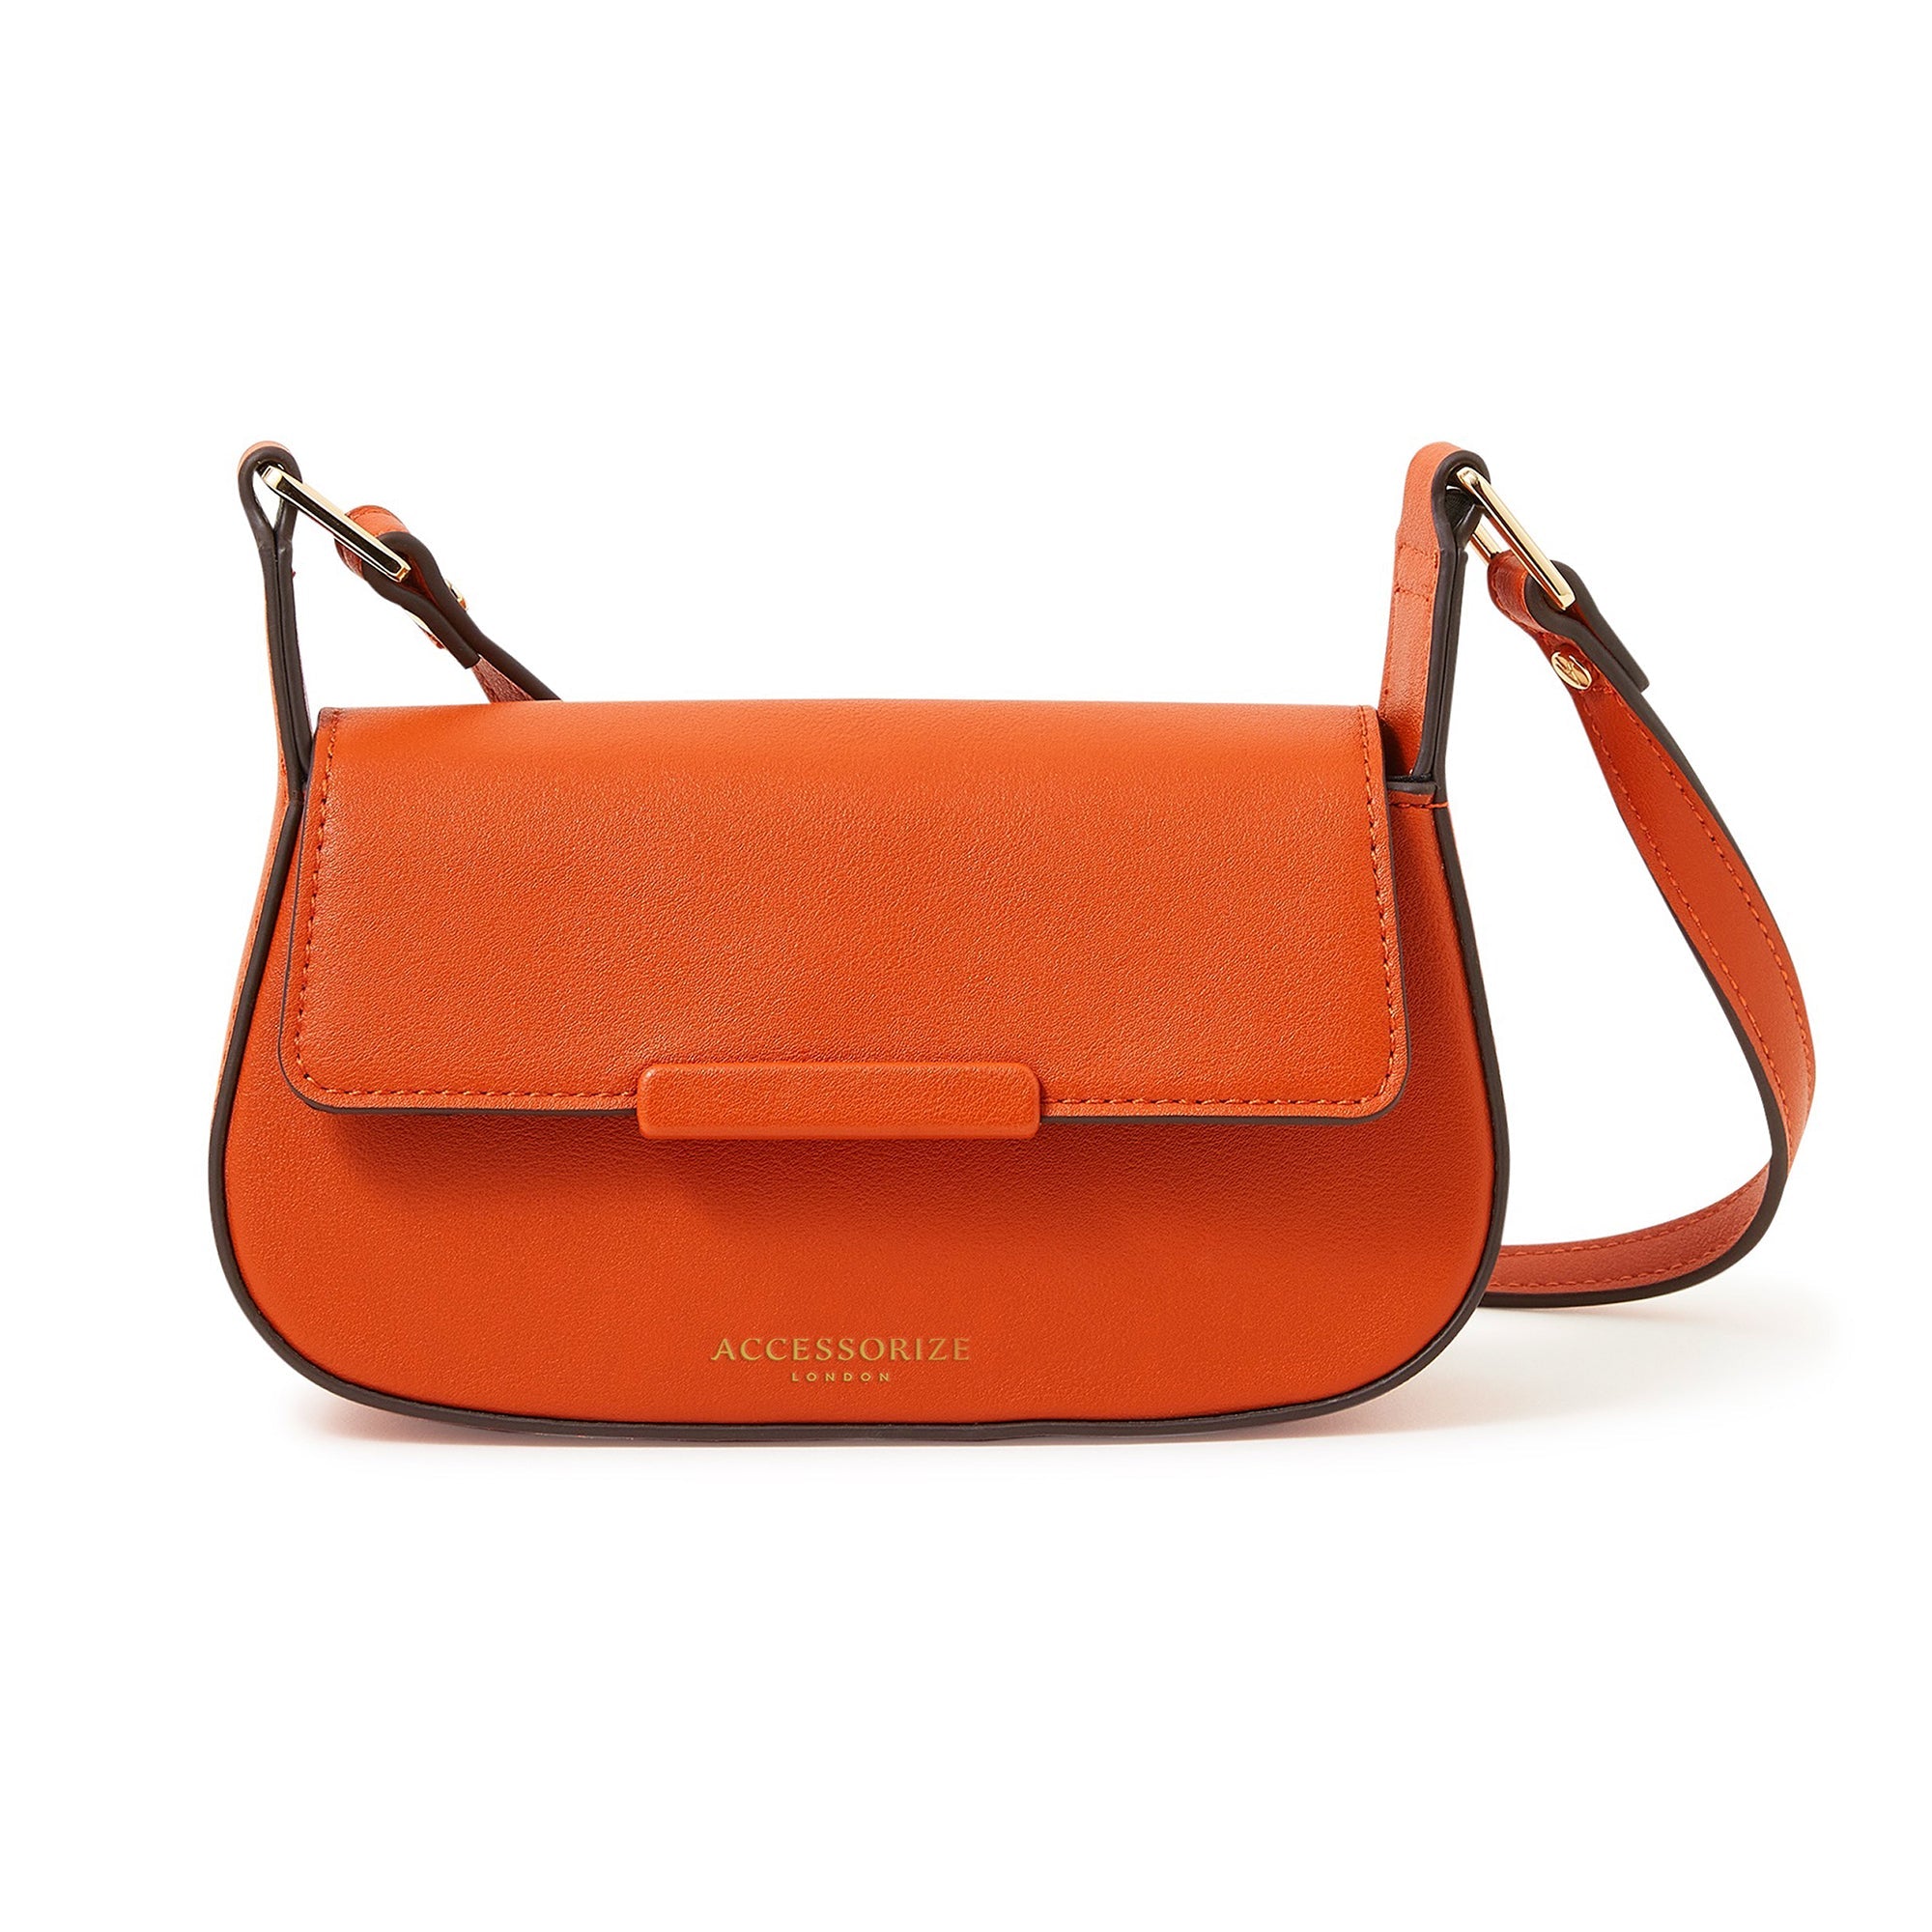 Accessorize London Women's Faux Leather Orange Small Saddle Sling Bag